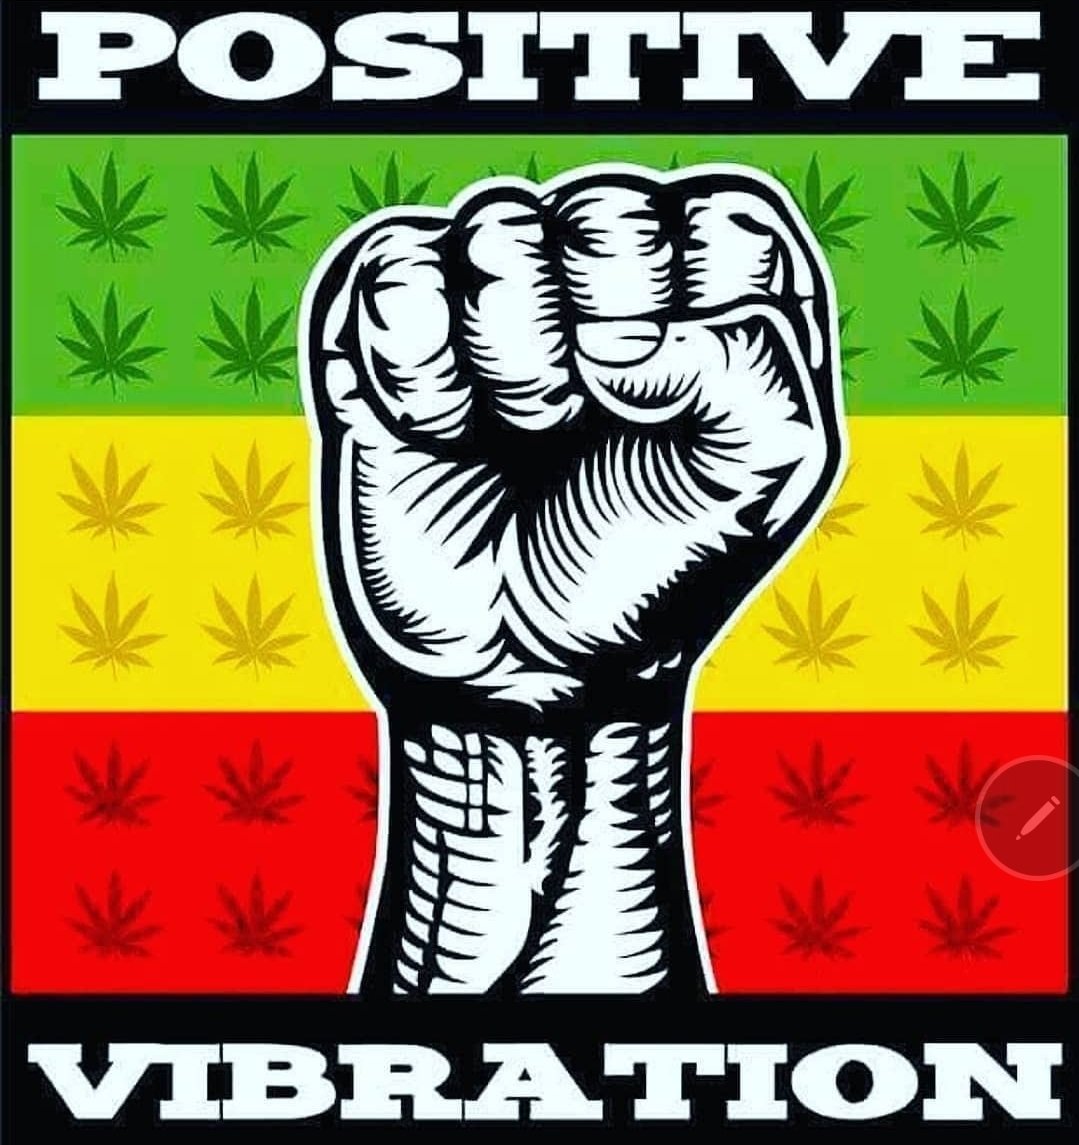 instagram.com/p/CgZoiqGuR1e/…
JOIN US TONIGHT AT @skullysmusicdiner 1151 N. HIGH ST. COLUMBUS, OHIO 
21 & OVER WITH I.D/ 9PM - 2AM  #reggae #reggaemusic #rootsandculture #rootsrockreggae #ska #soca #dancehallmusic #positivevibes #jahlove 🇯🇲🇰🇪🇹🇿🇬🇳🇮🇪🇳🇬🇸🇱🇱🇨🇹🇹🇬🇾🇬🇭🇲🇱🇲🇼🇺🇸❤💛💚🔥🆙